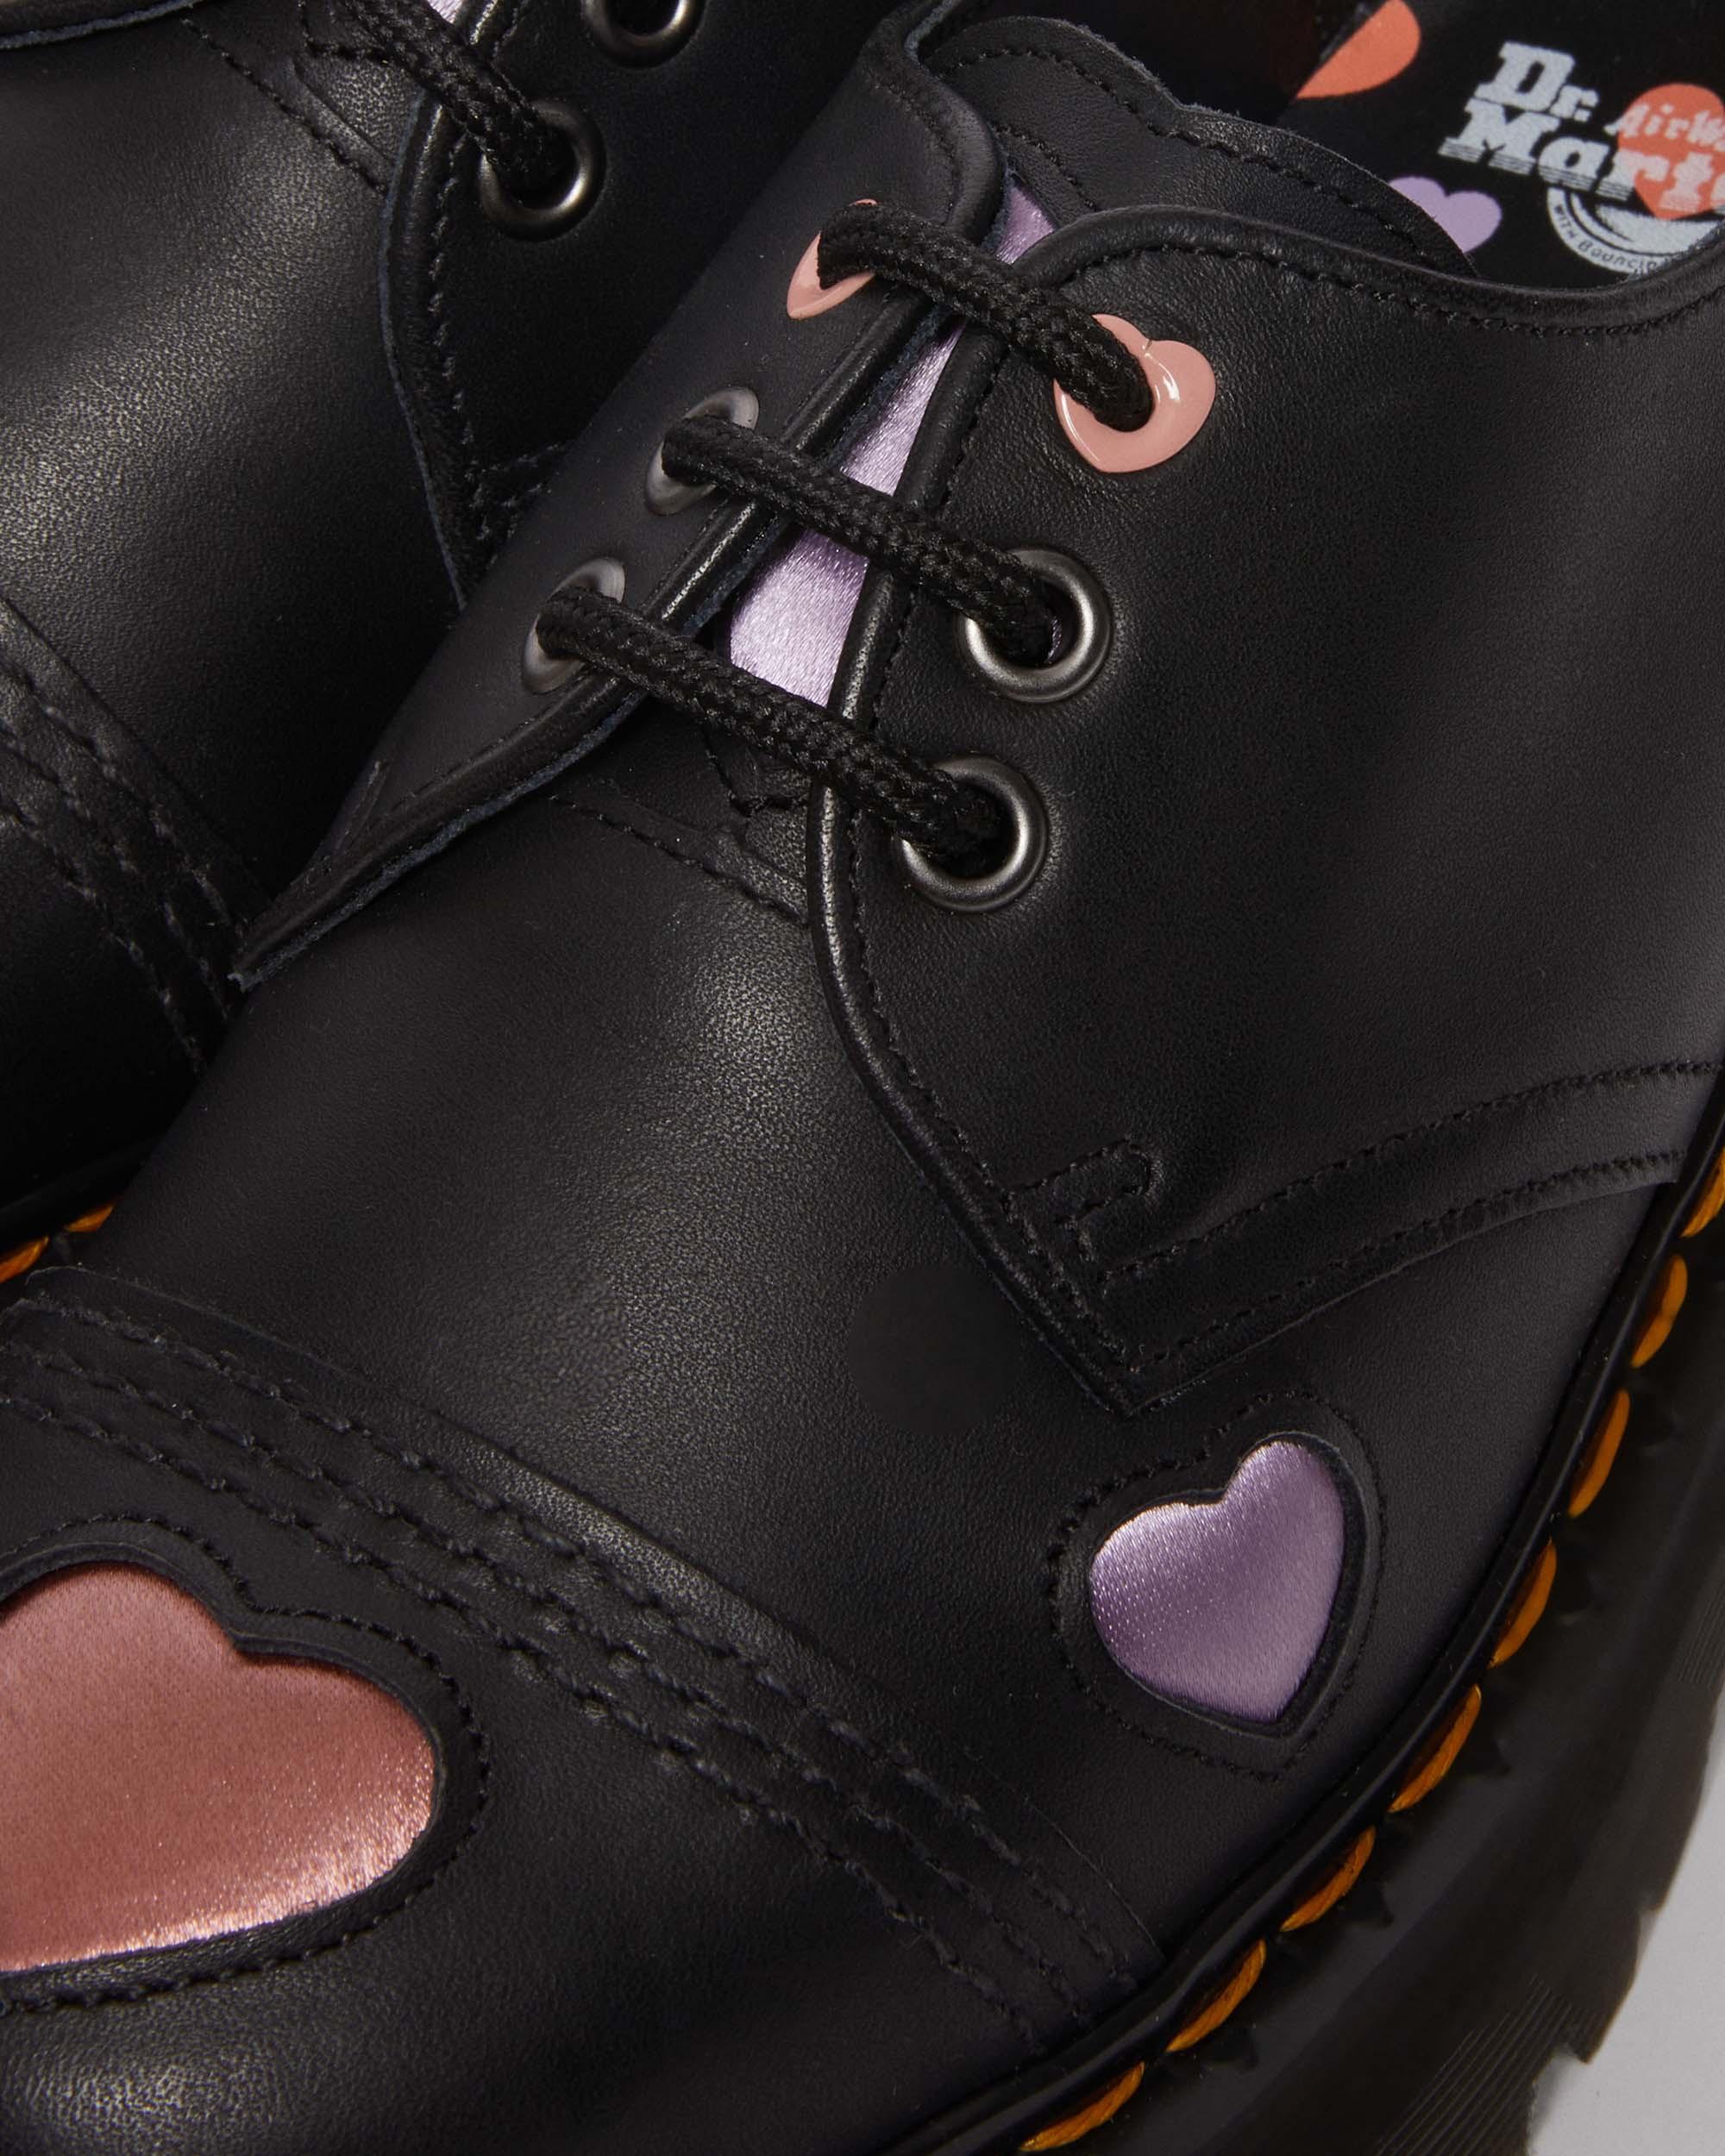 1461 Leather Heart Platform Shoes in Black